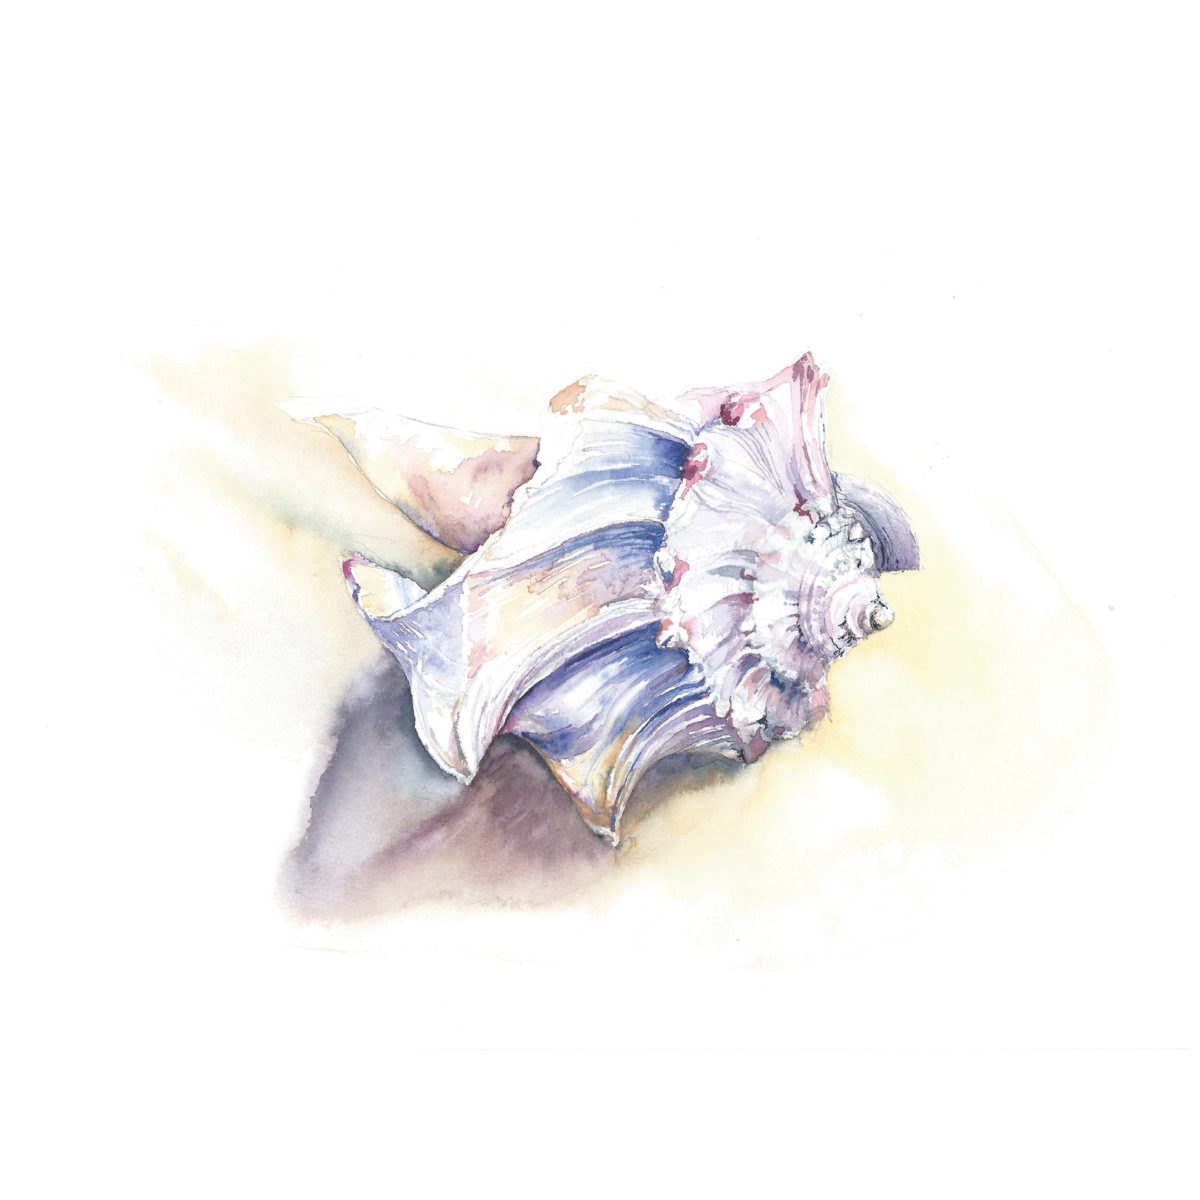 Watercolor of a beauty Whelk shell